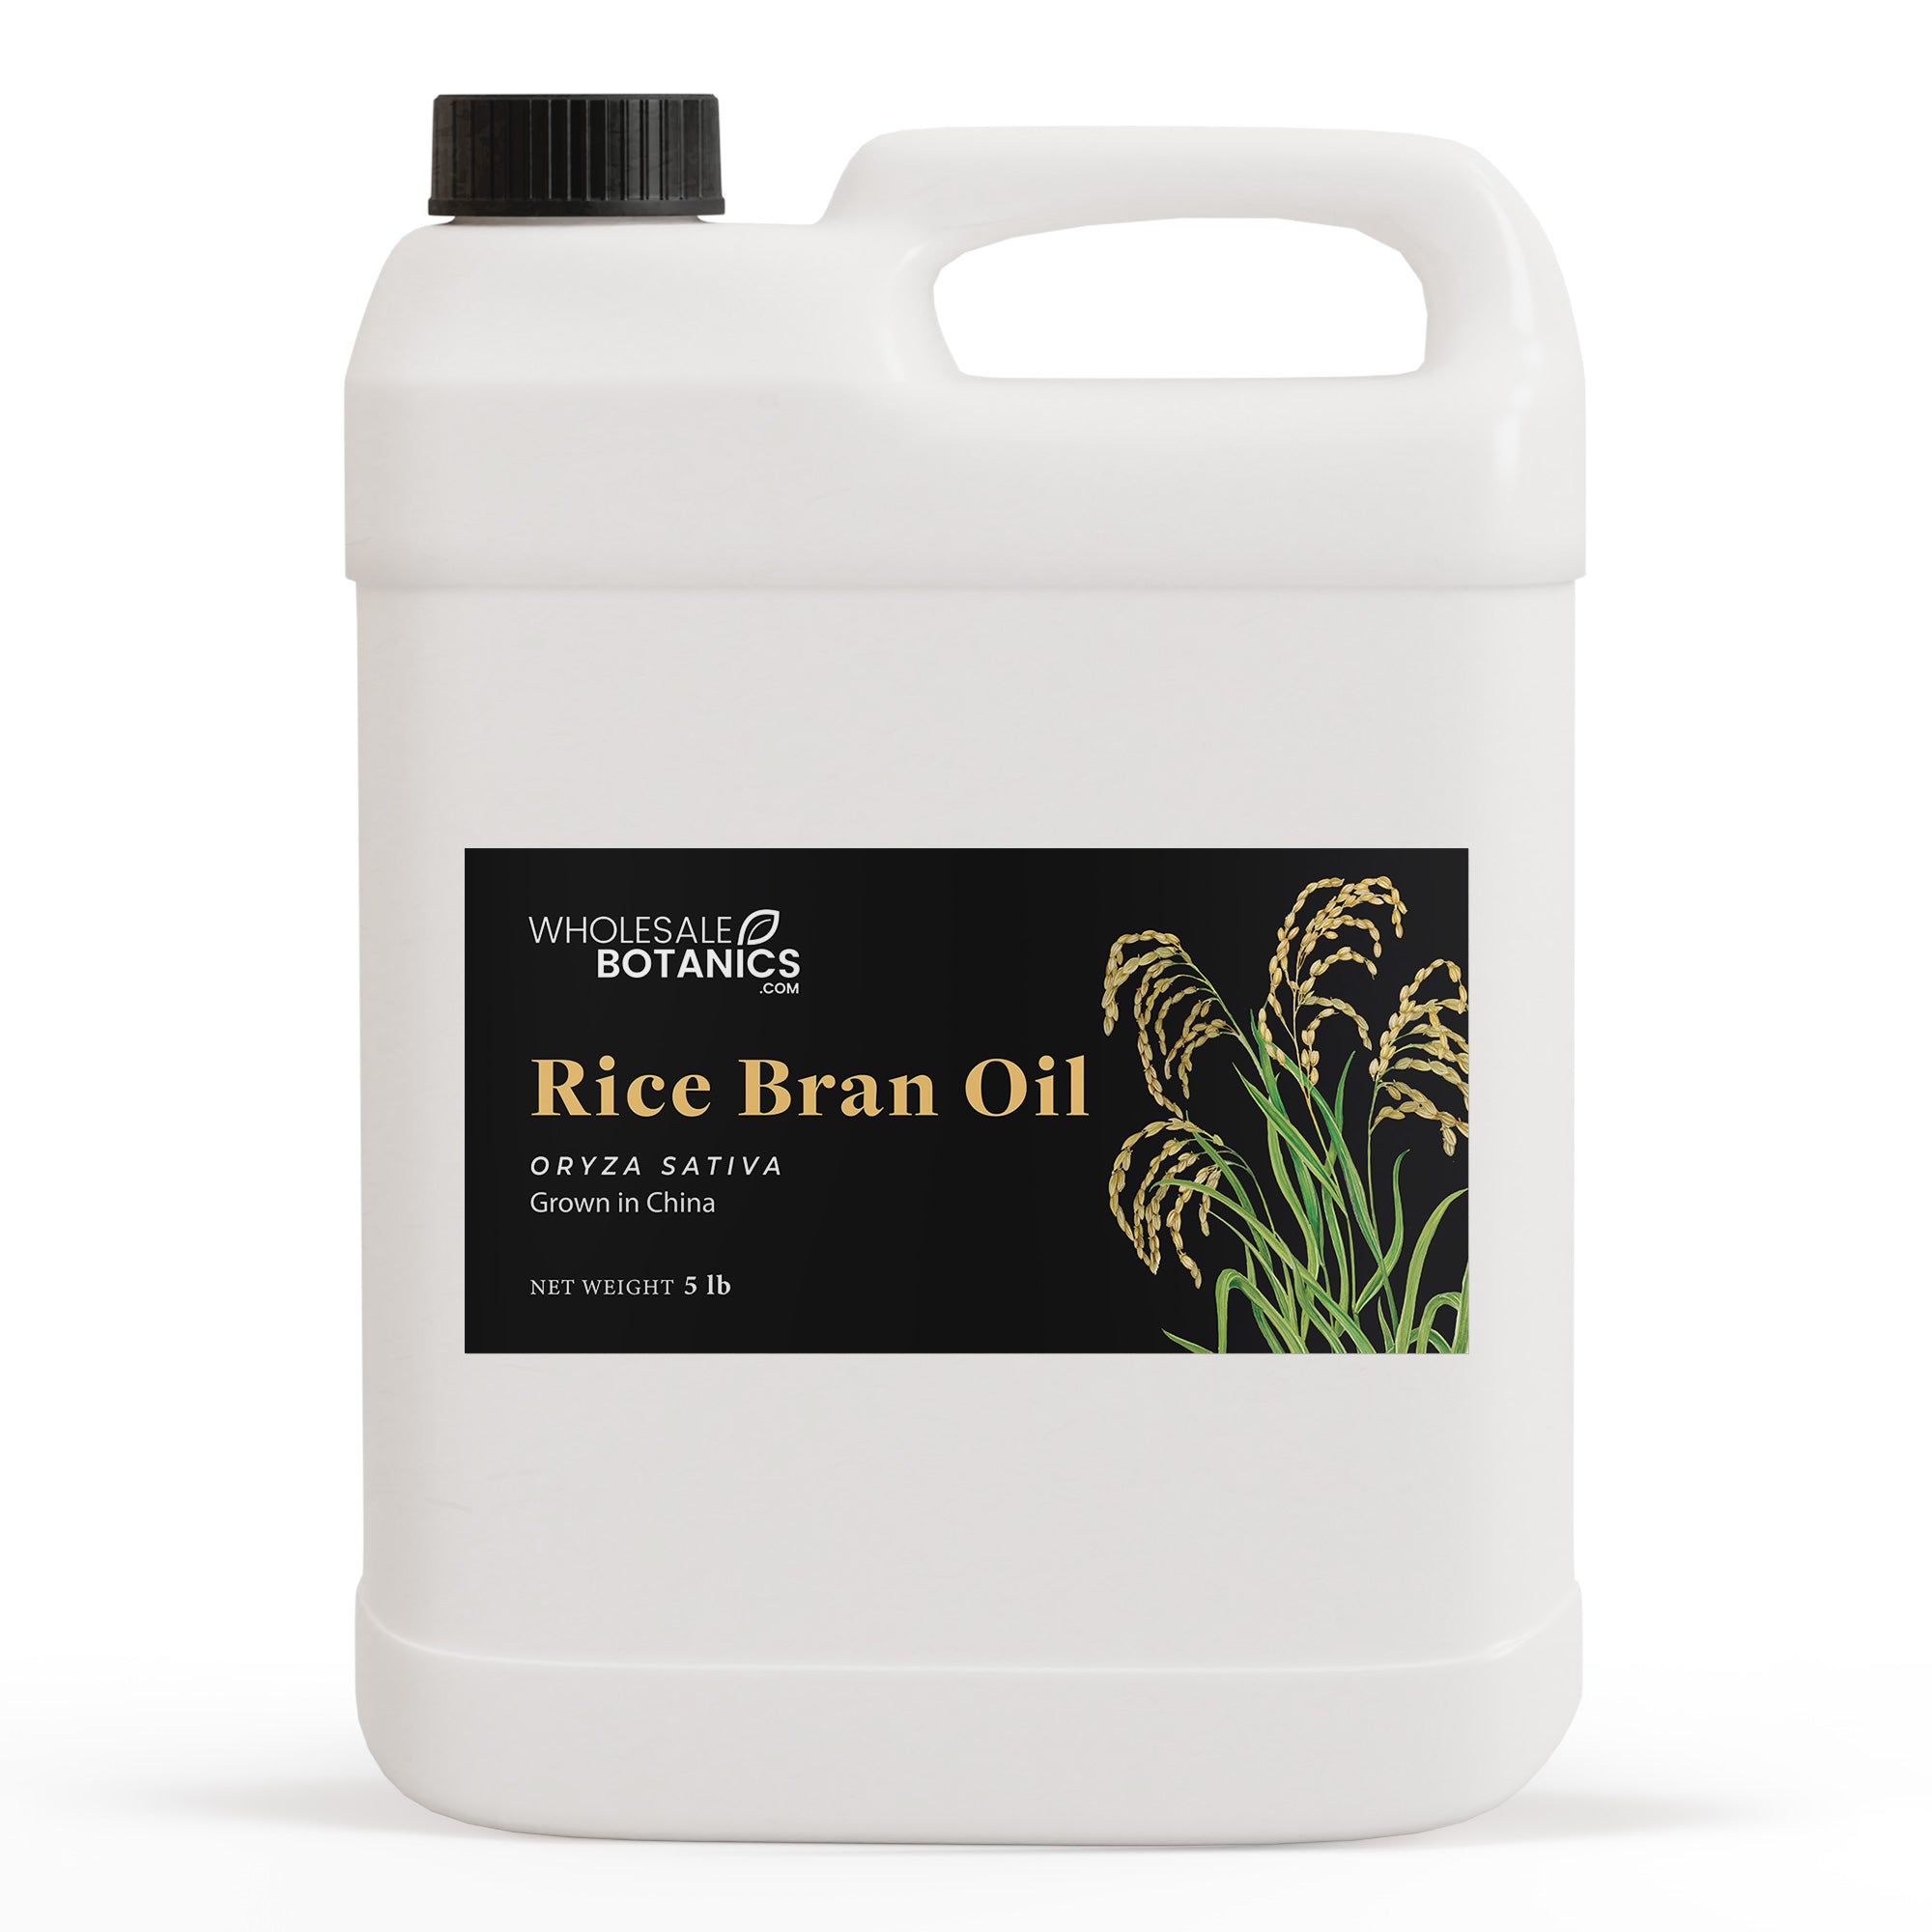 Rice Bran Oil — Wholesale Botanics